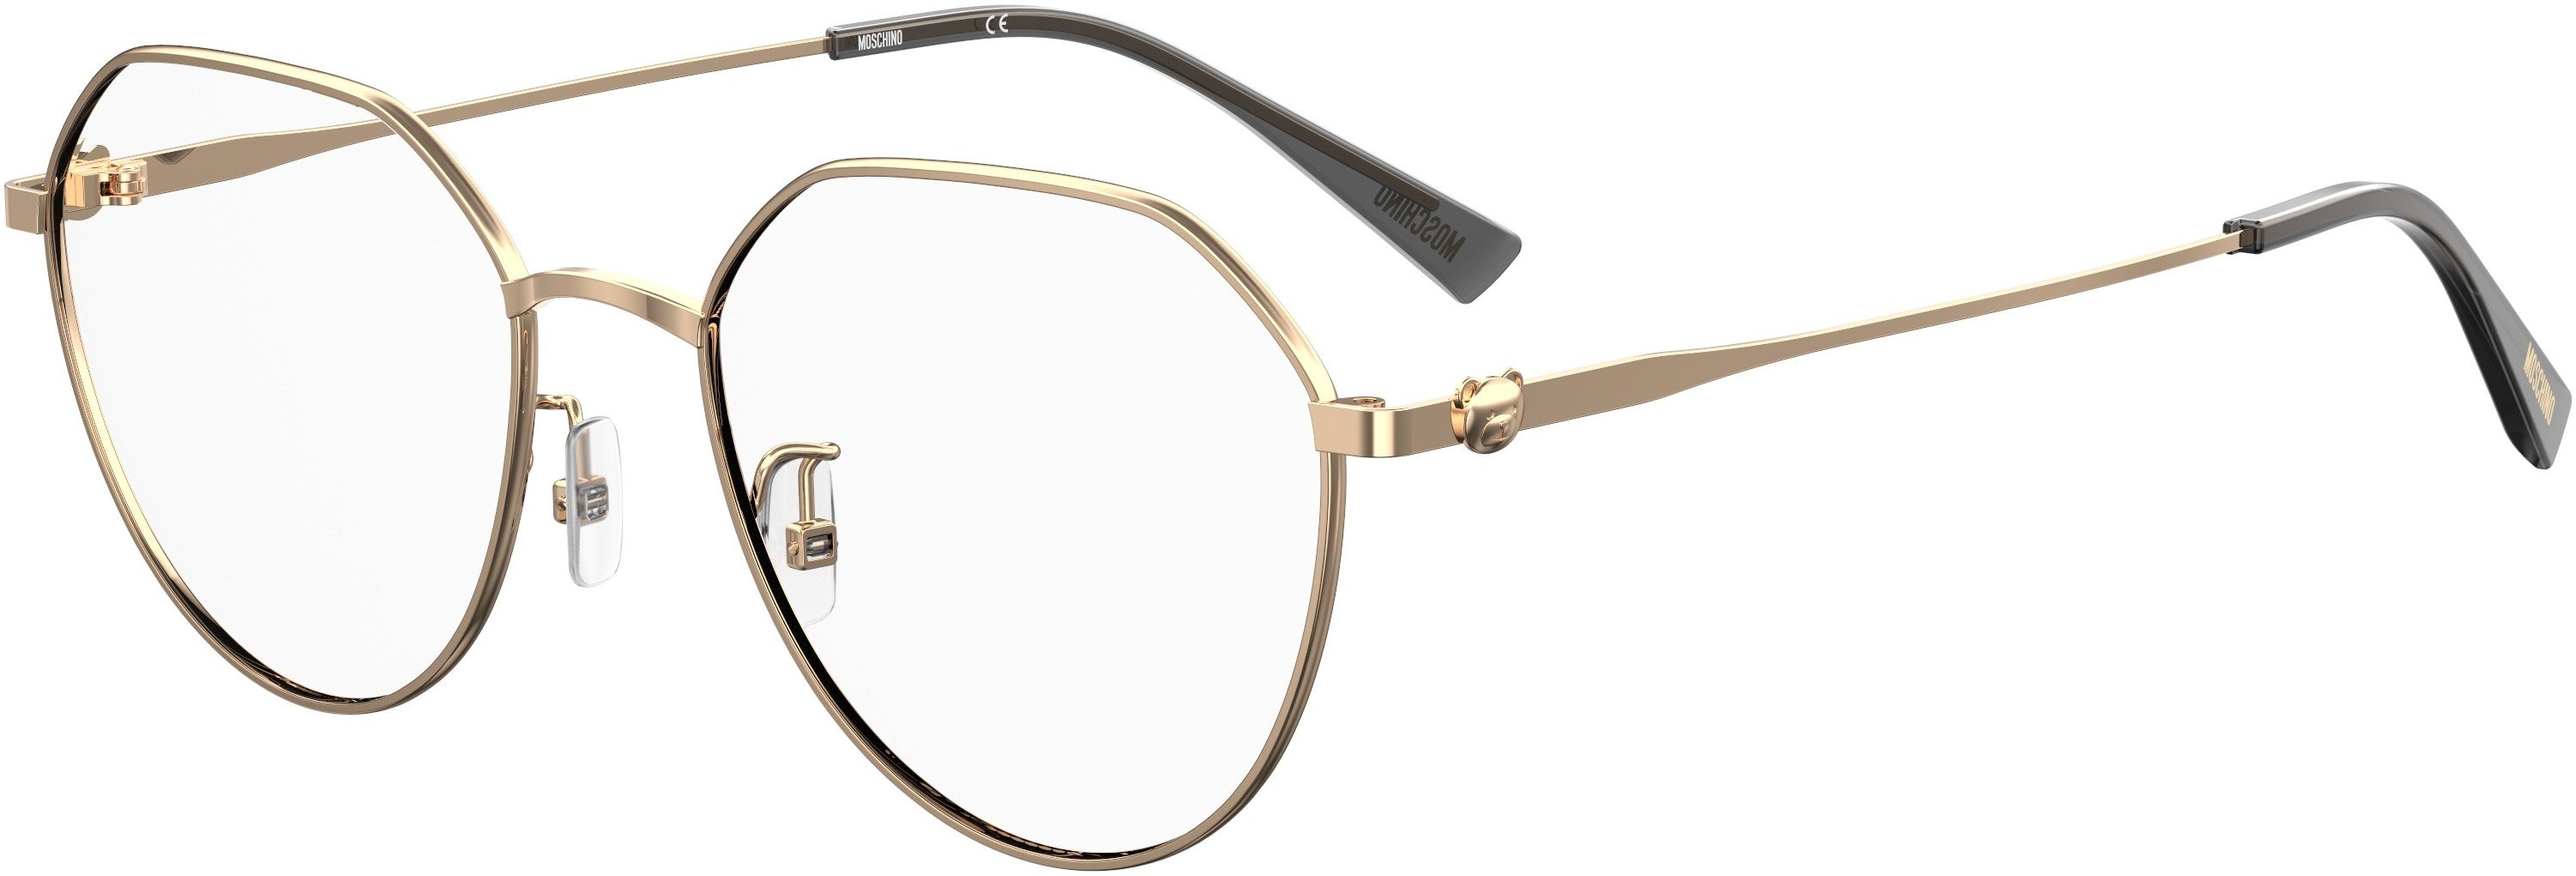  Moschino 564/F Geometric Eyeglasses 0J5G-0J5G  Gold (00 Demo Lens)